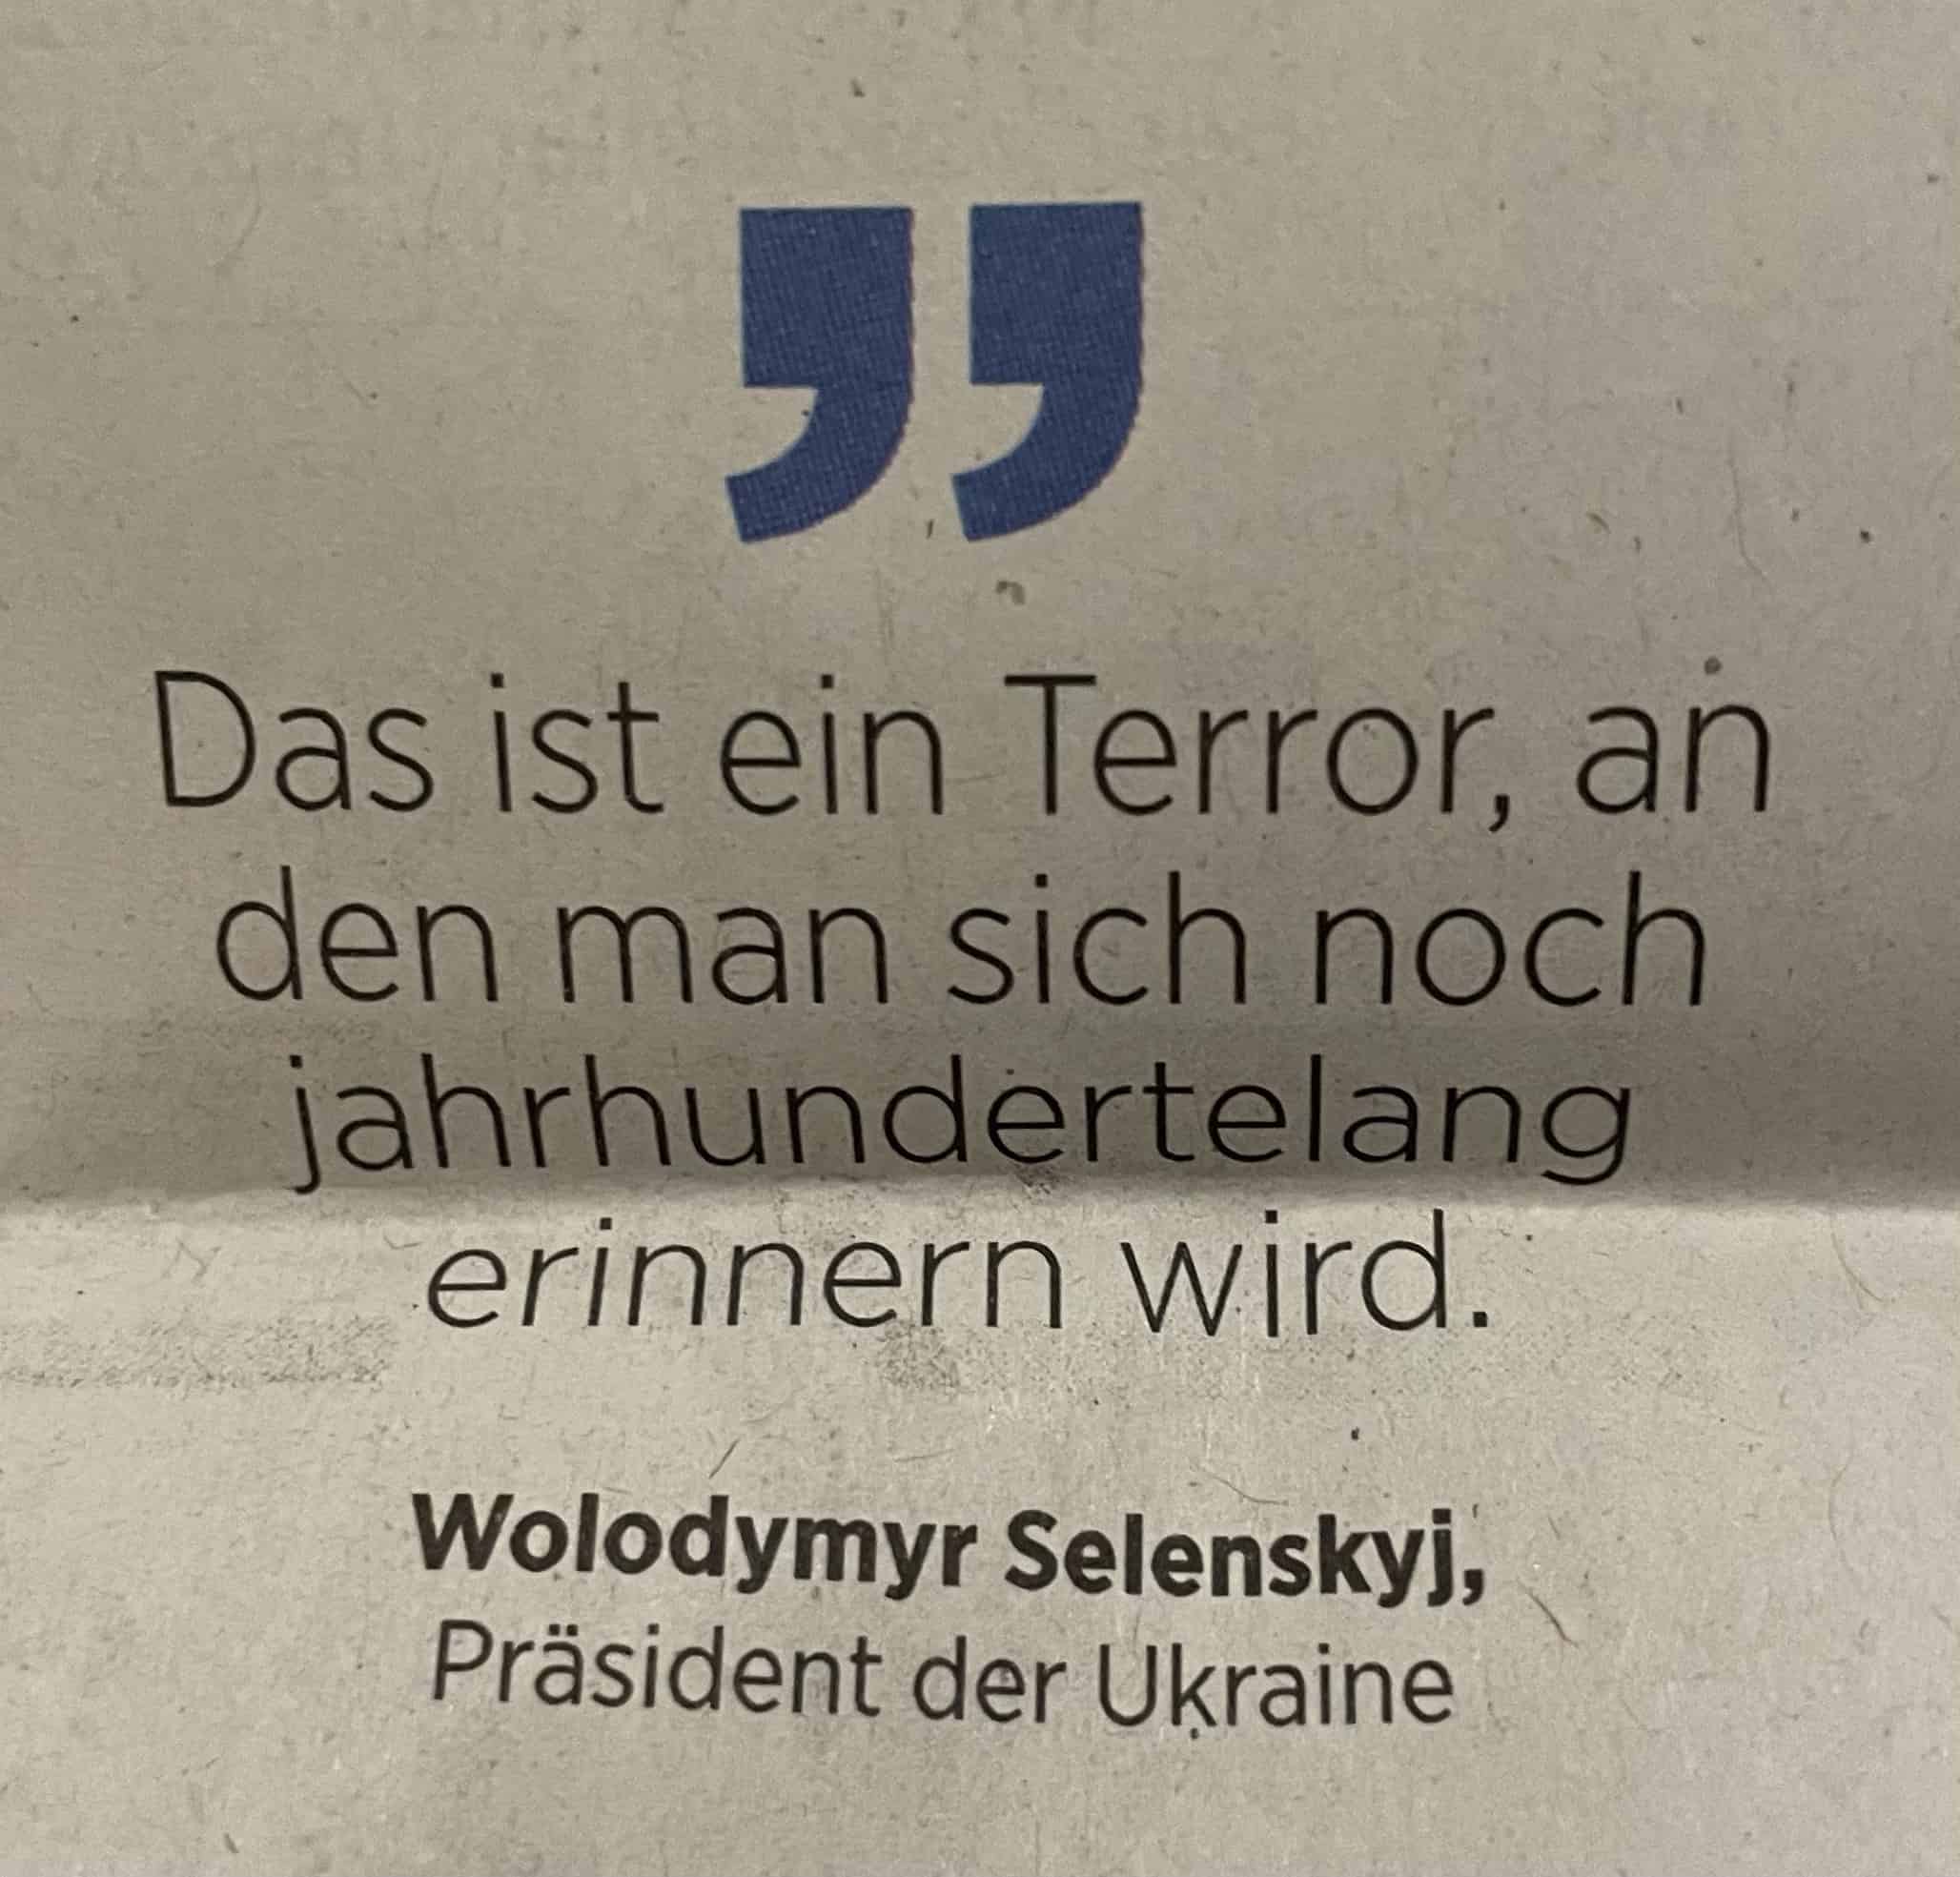 Präsident Selensky zum Jahrhundertterror